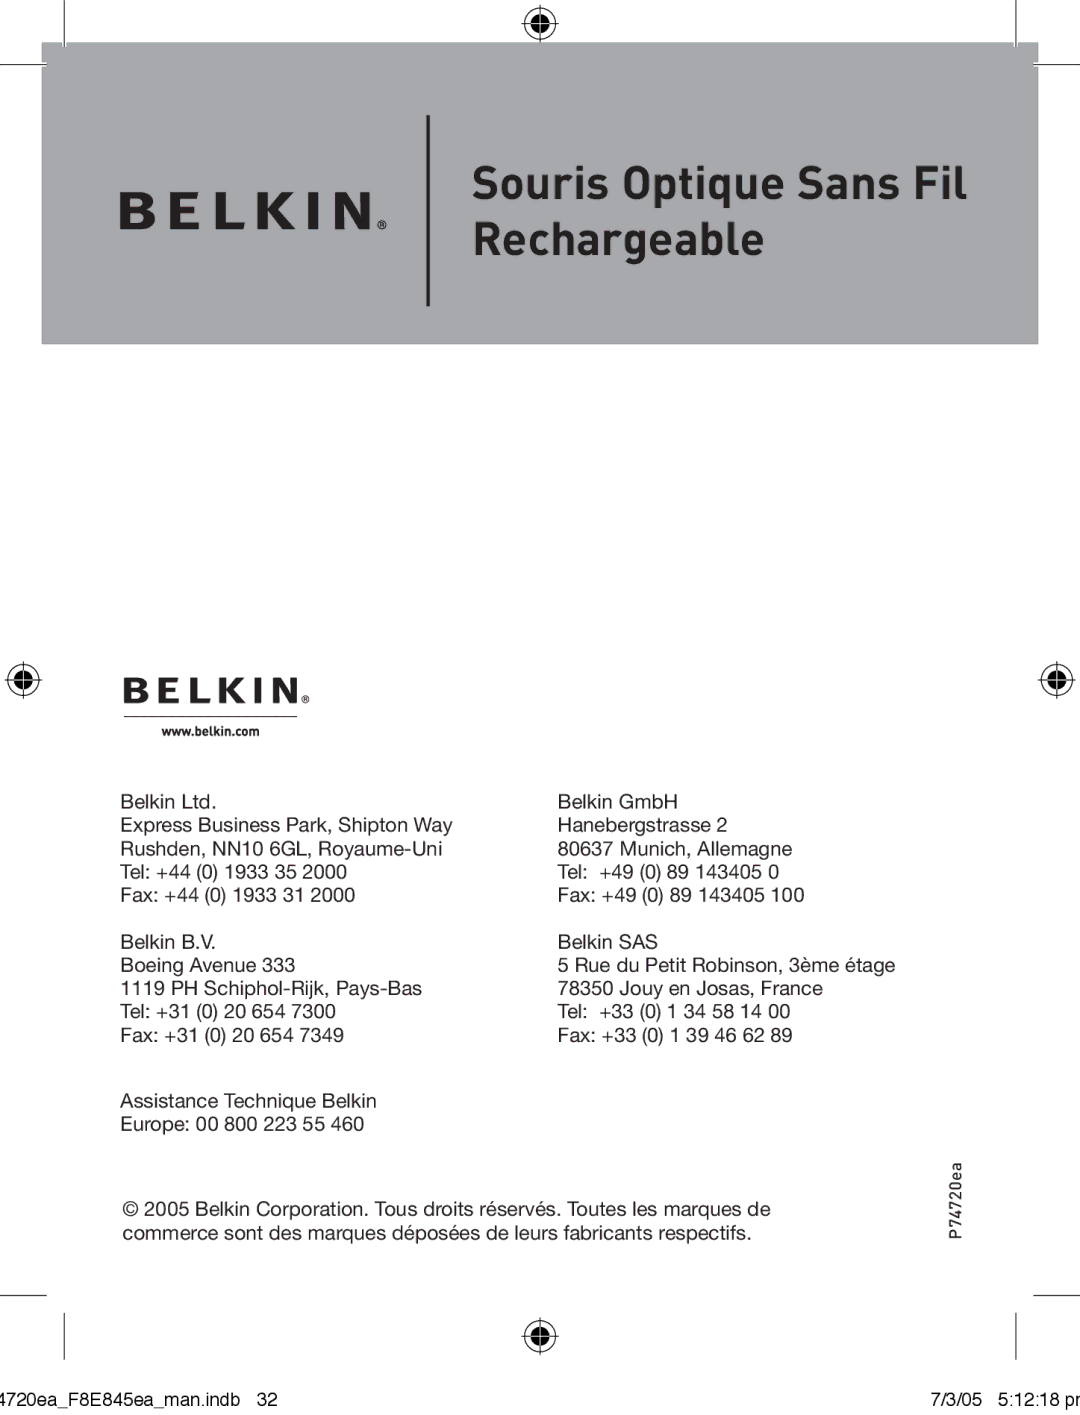 Belkin F8E845ea manual Rue du Petit Robinson, 3ème étage 